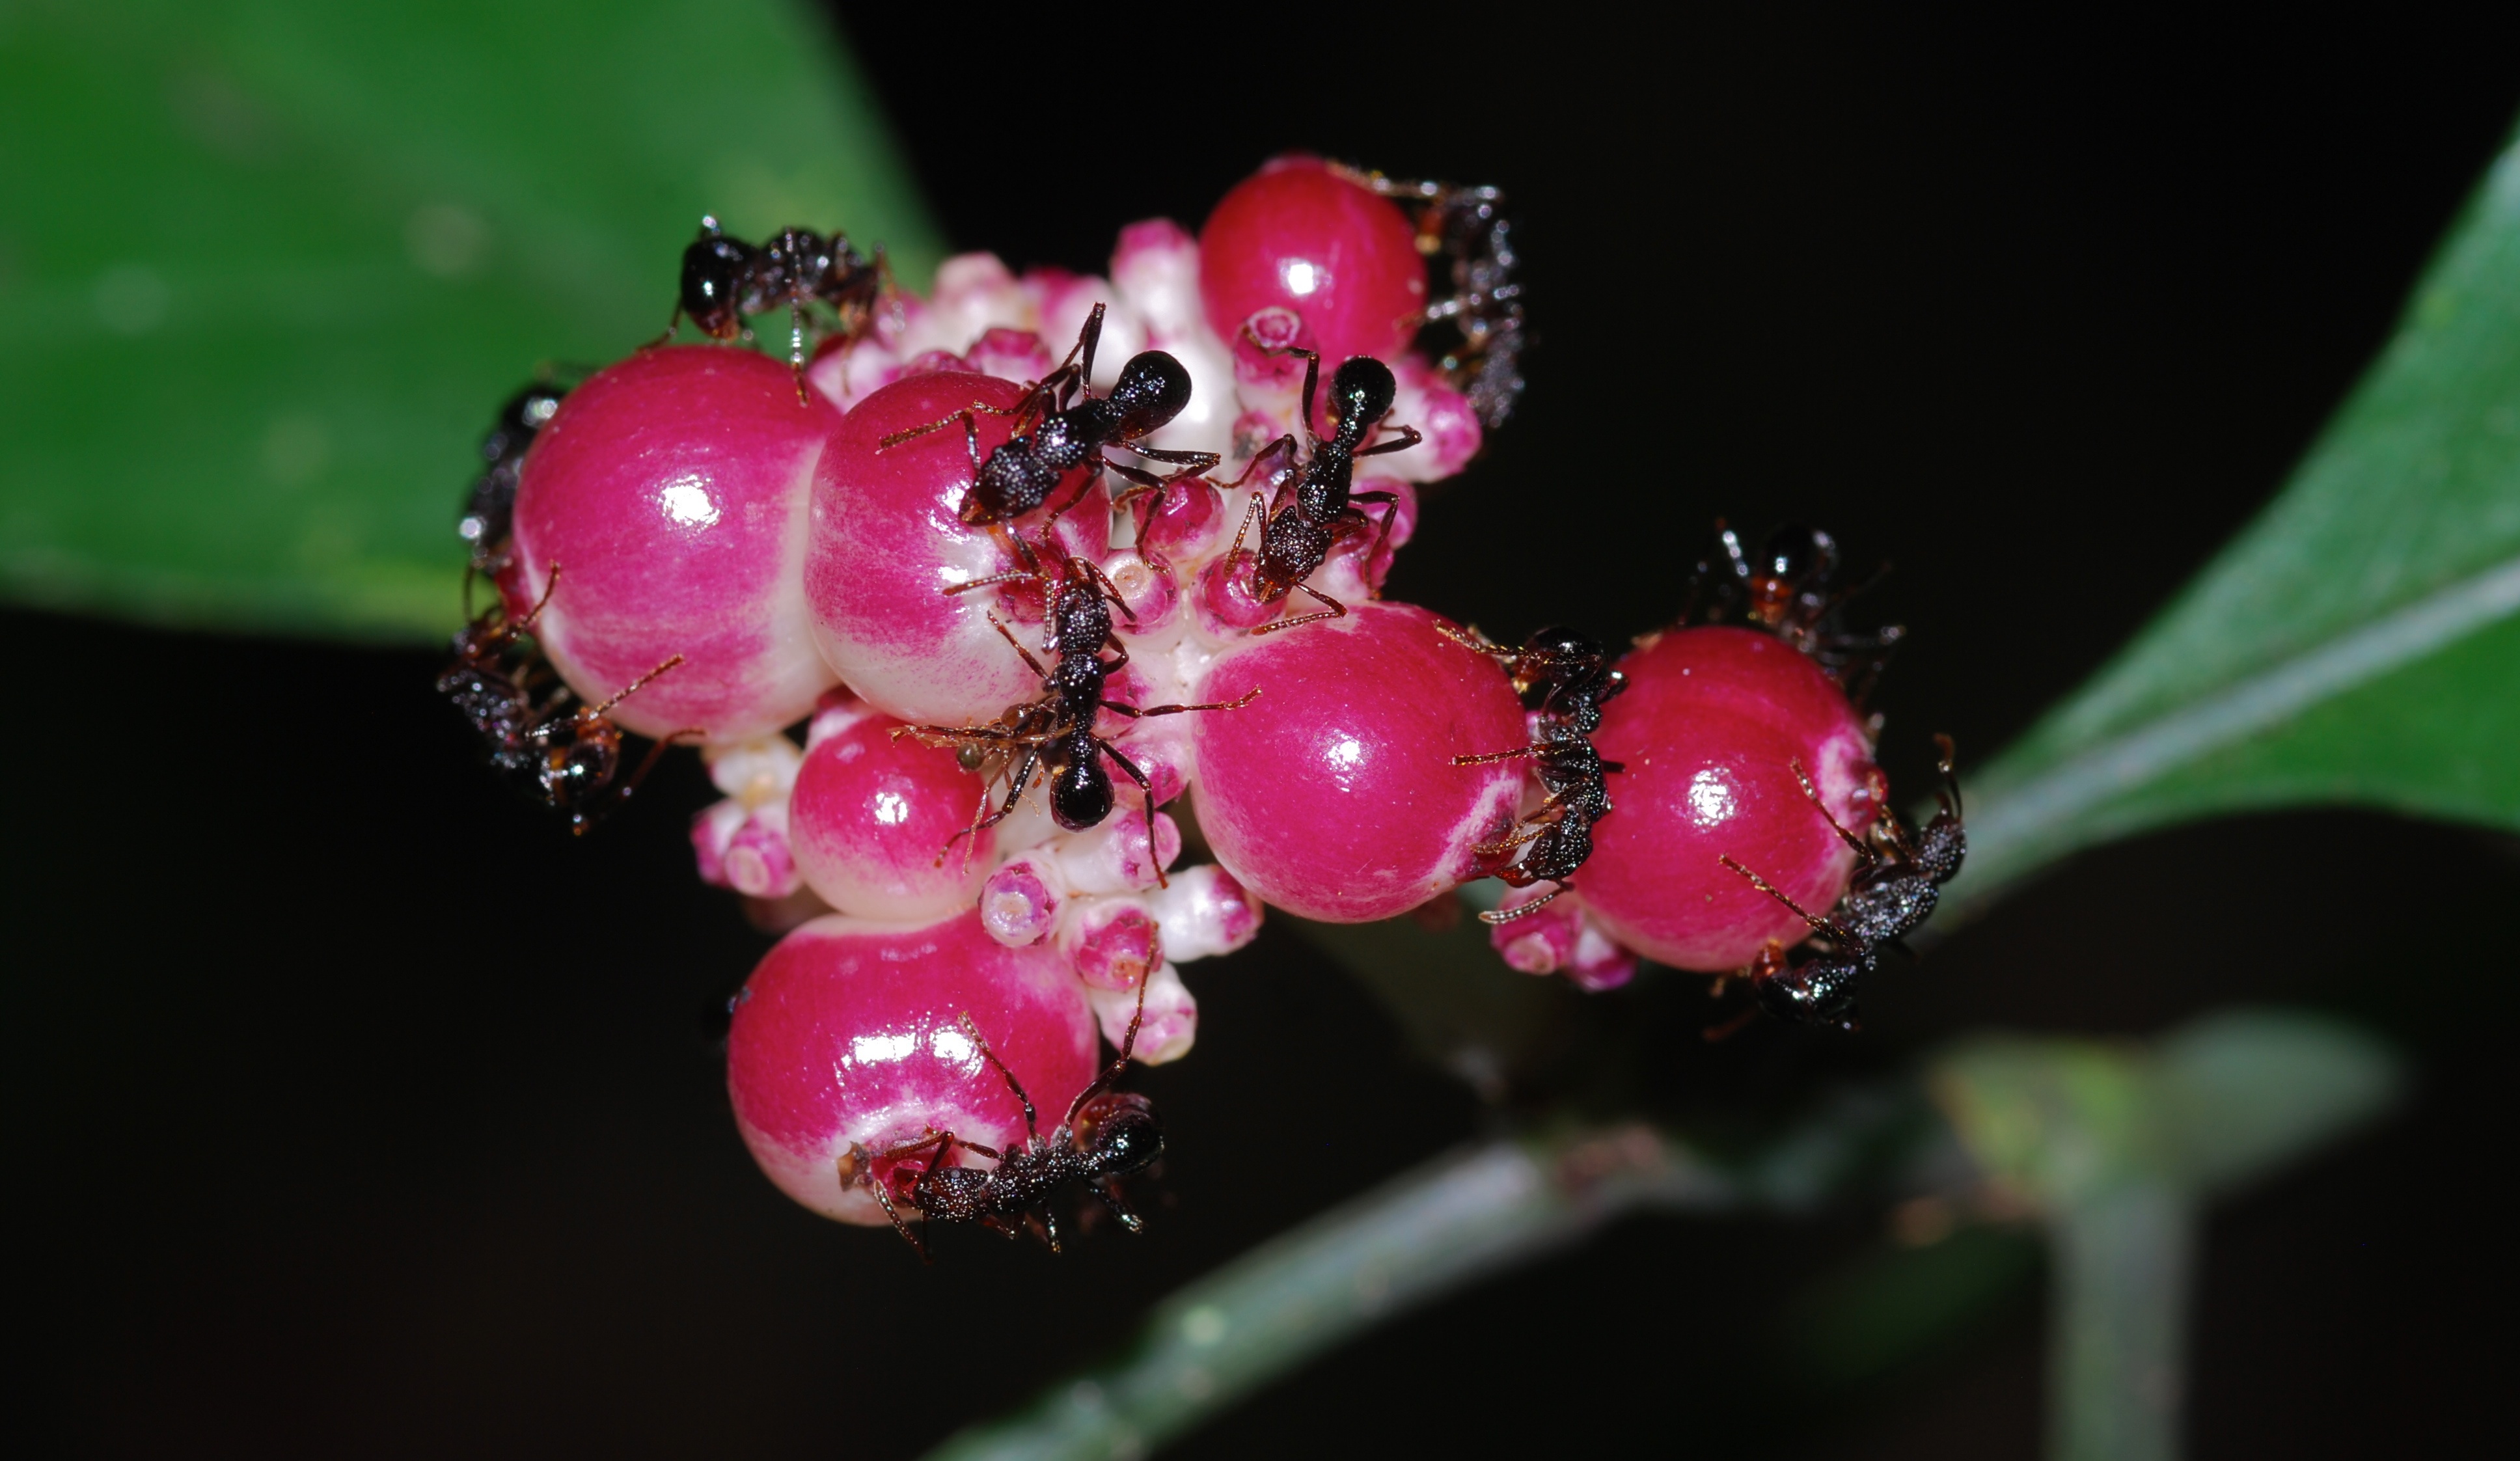 Ants on Wild Fruits (8686150146)